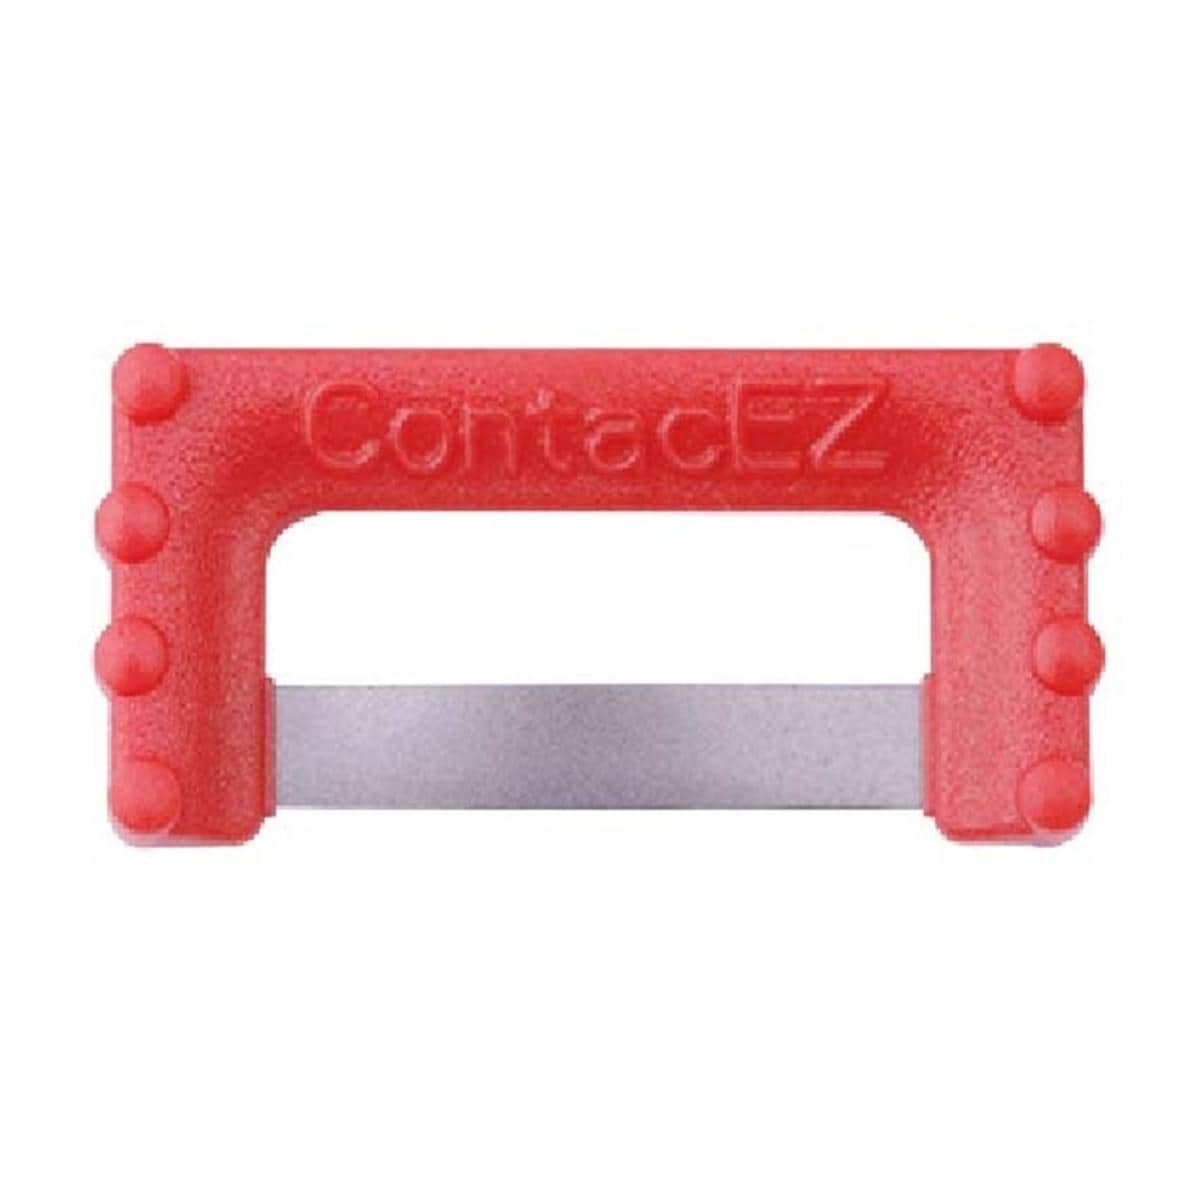 ContacEZ IPR - navulling - REF. 32432 - Rood 0,12mm, 32 stuks